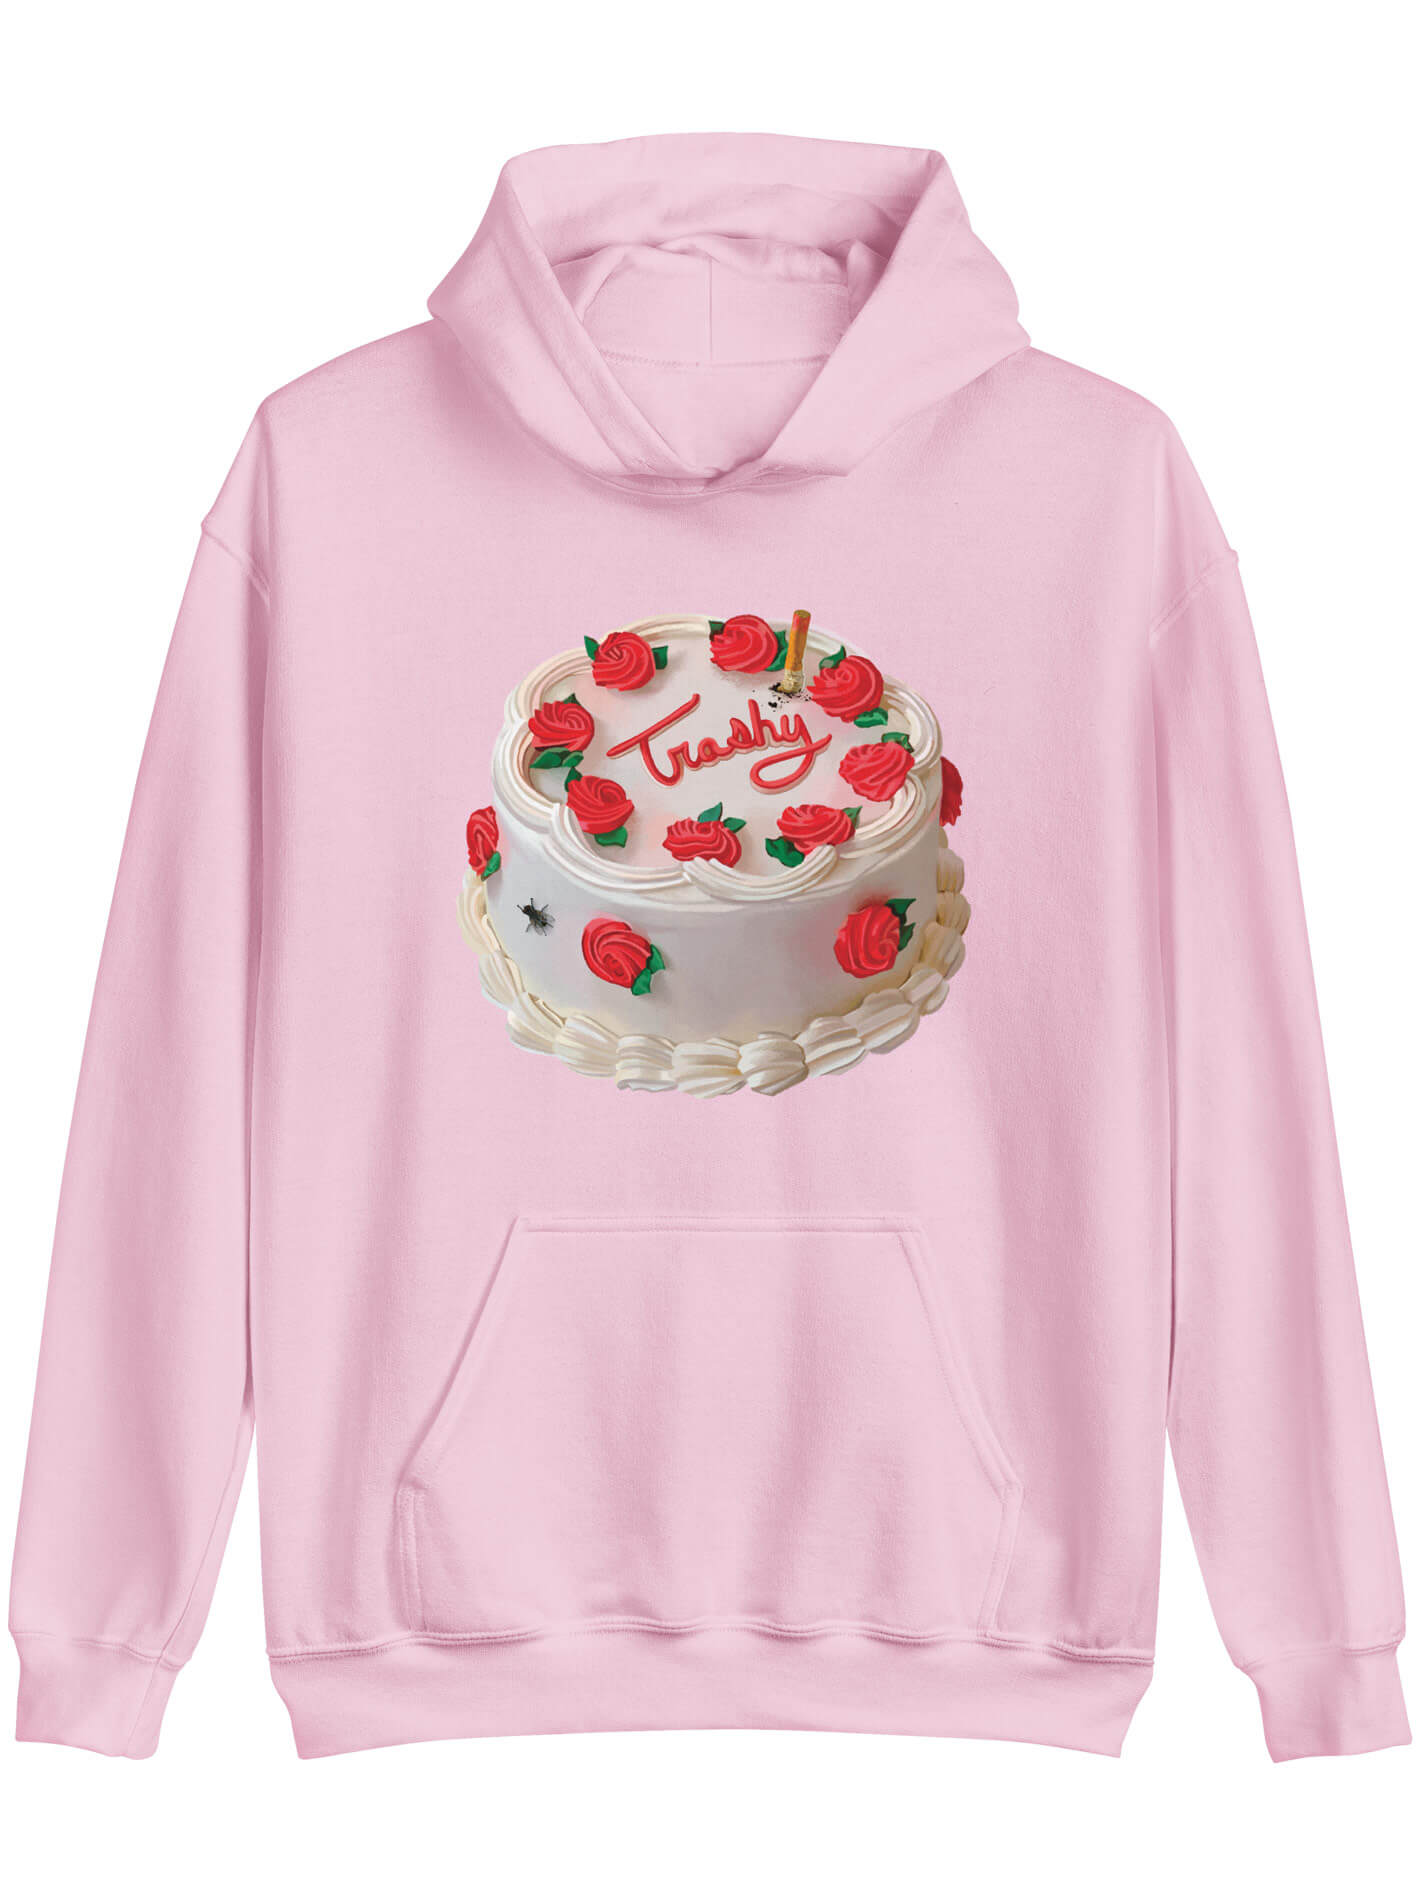 Kitsch cake pink hoodie.